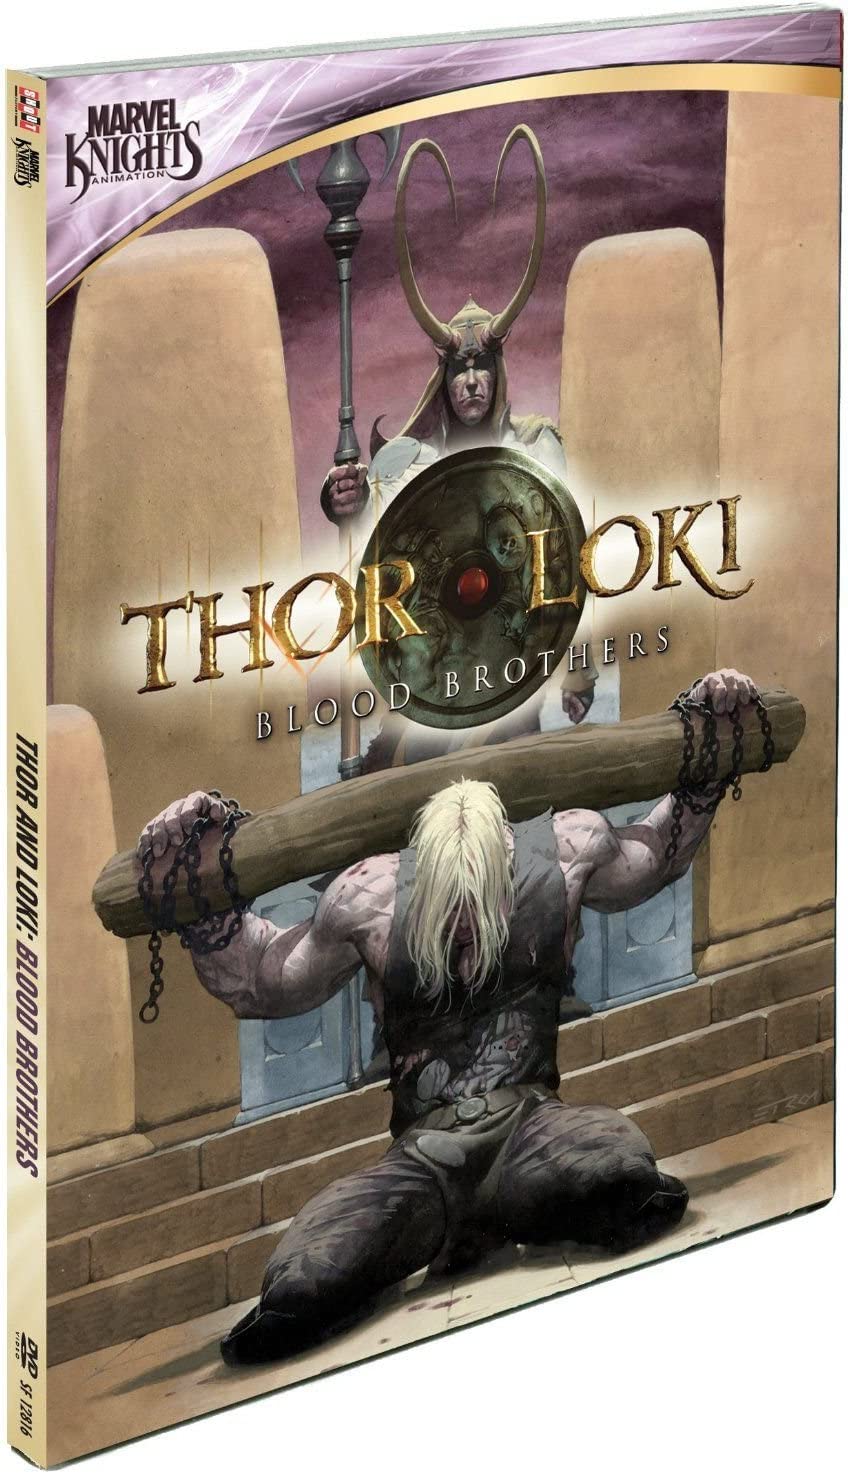 Marvel Knights: Thor & Loki [DVD]